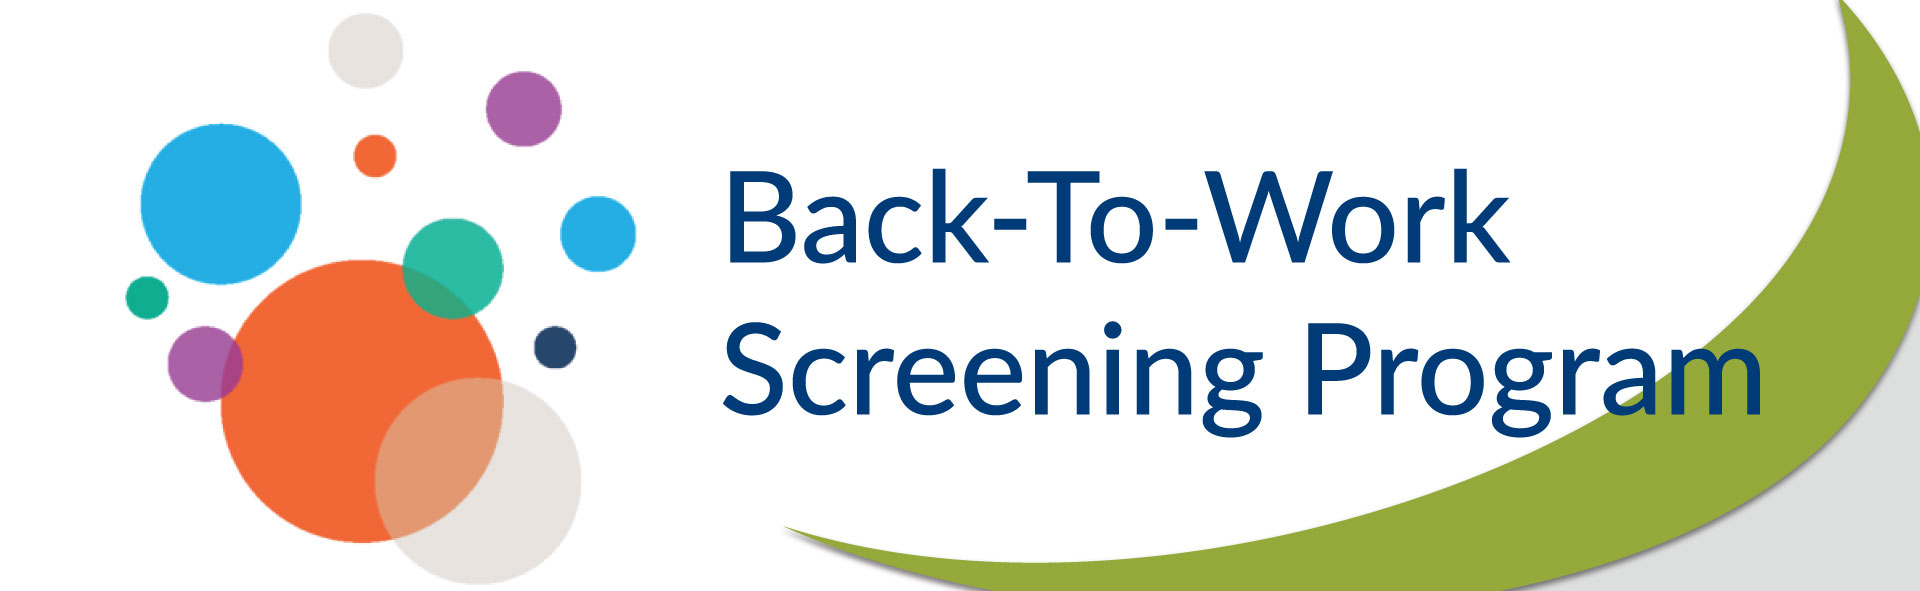 Back-to-Work screening program